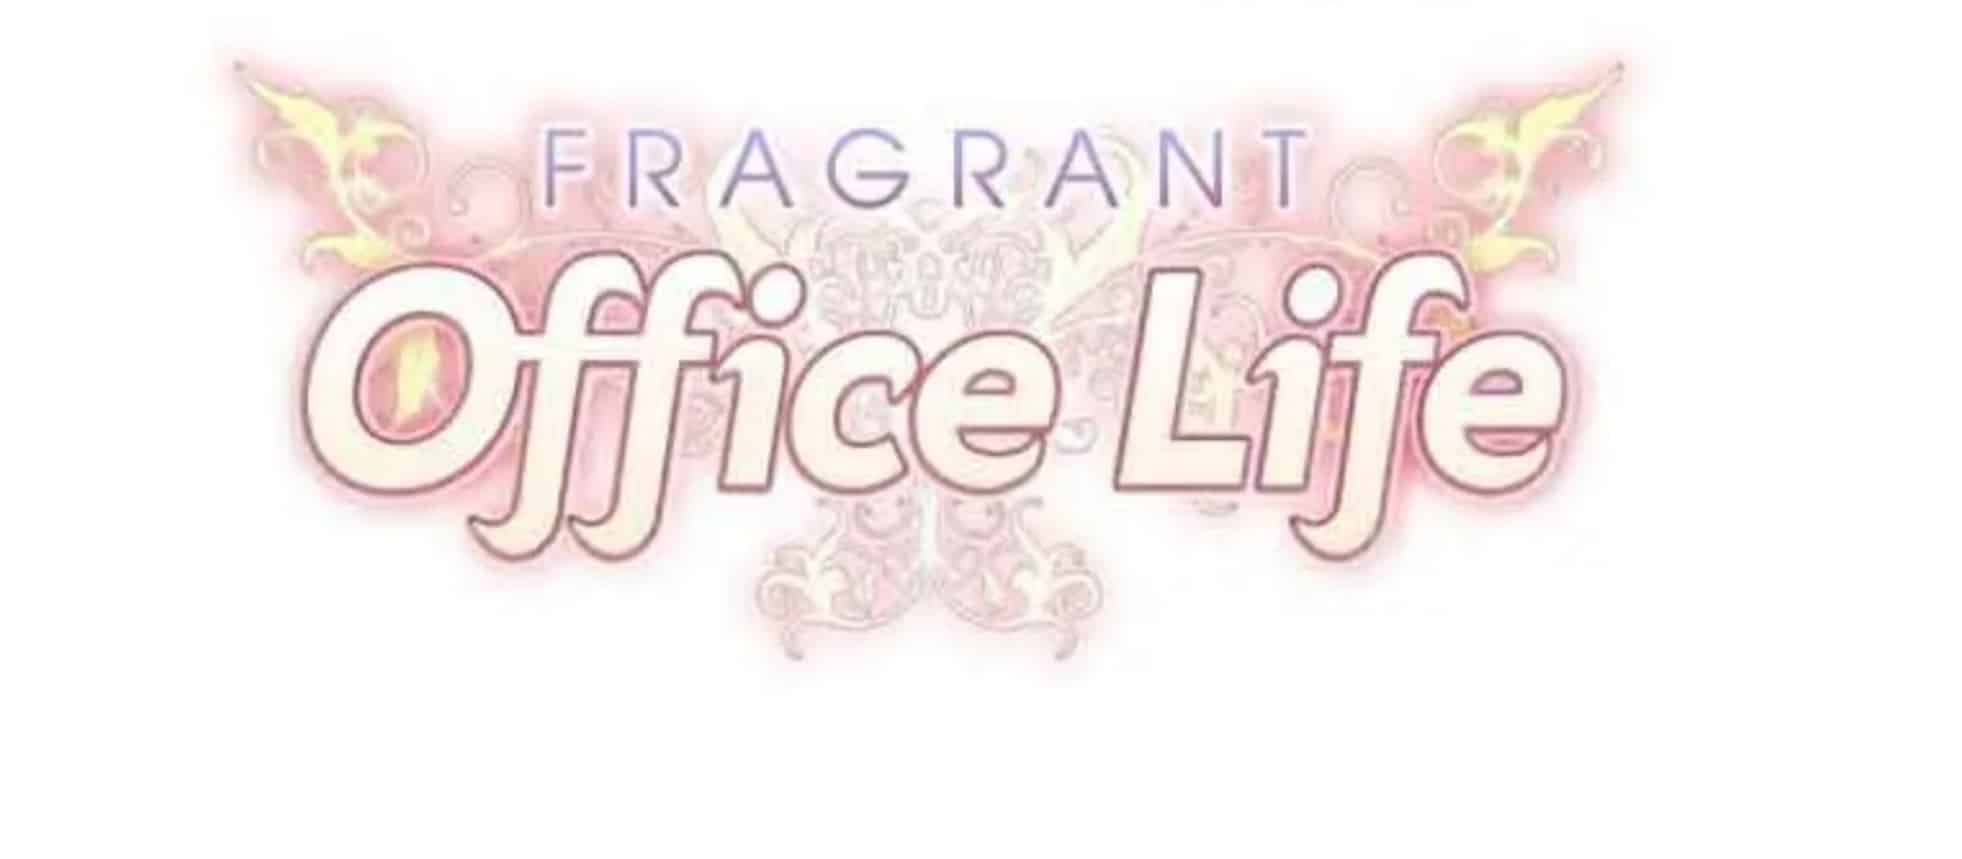 Fragrant office life1